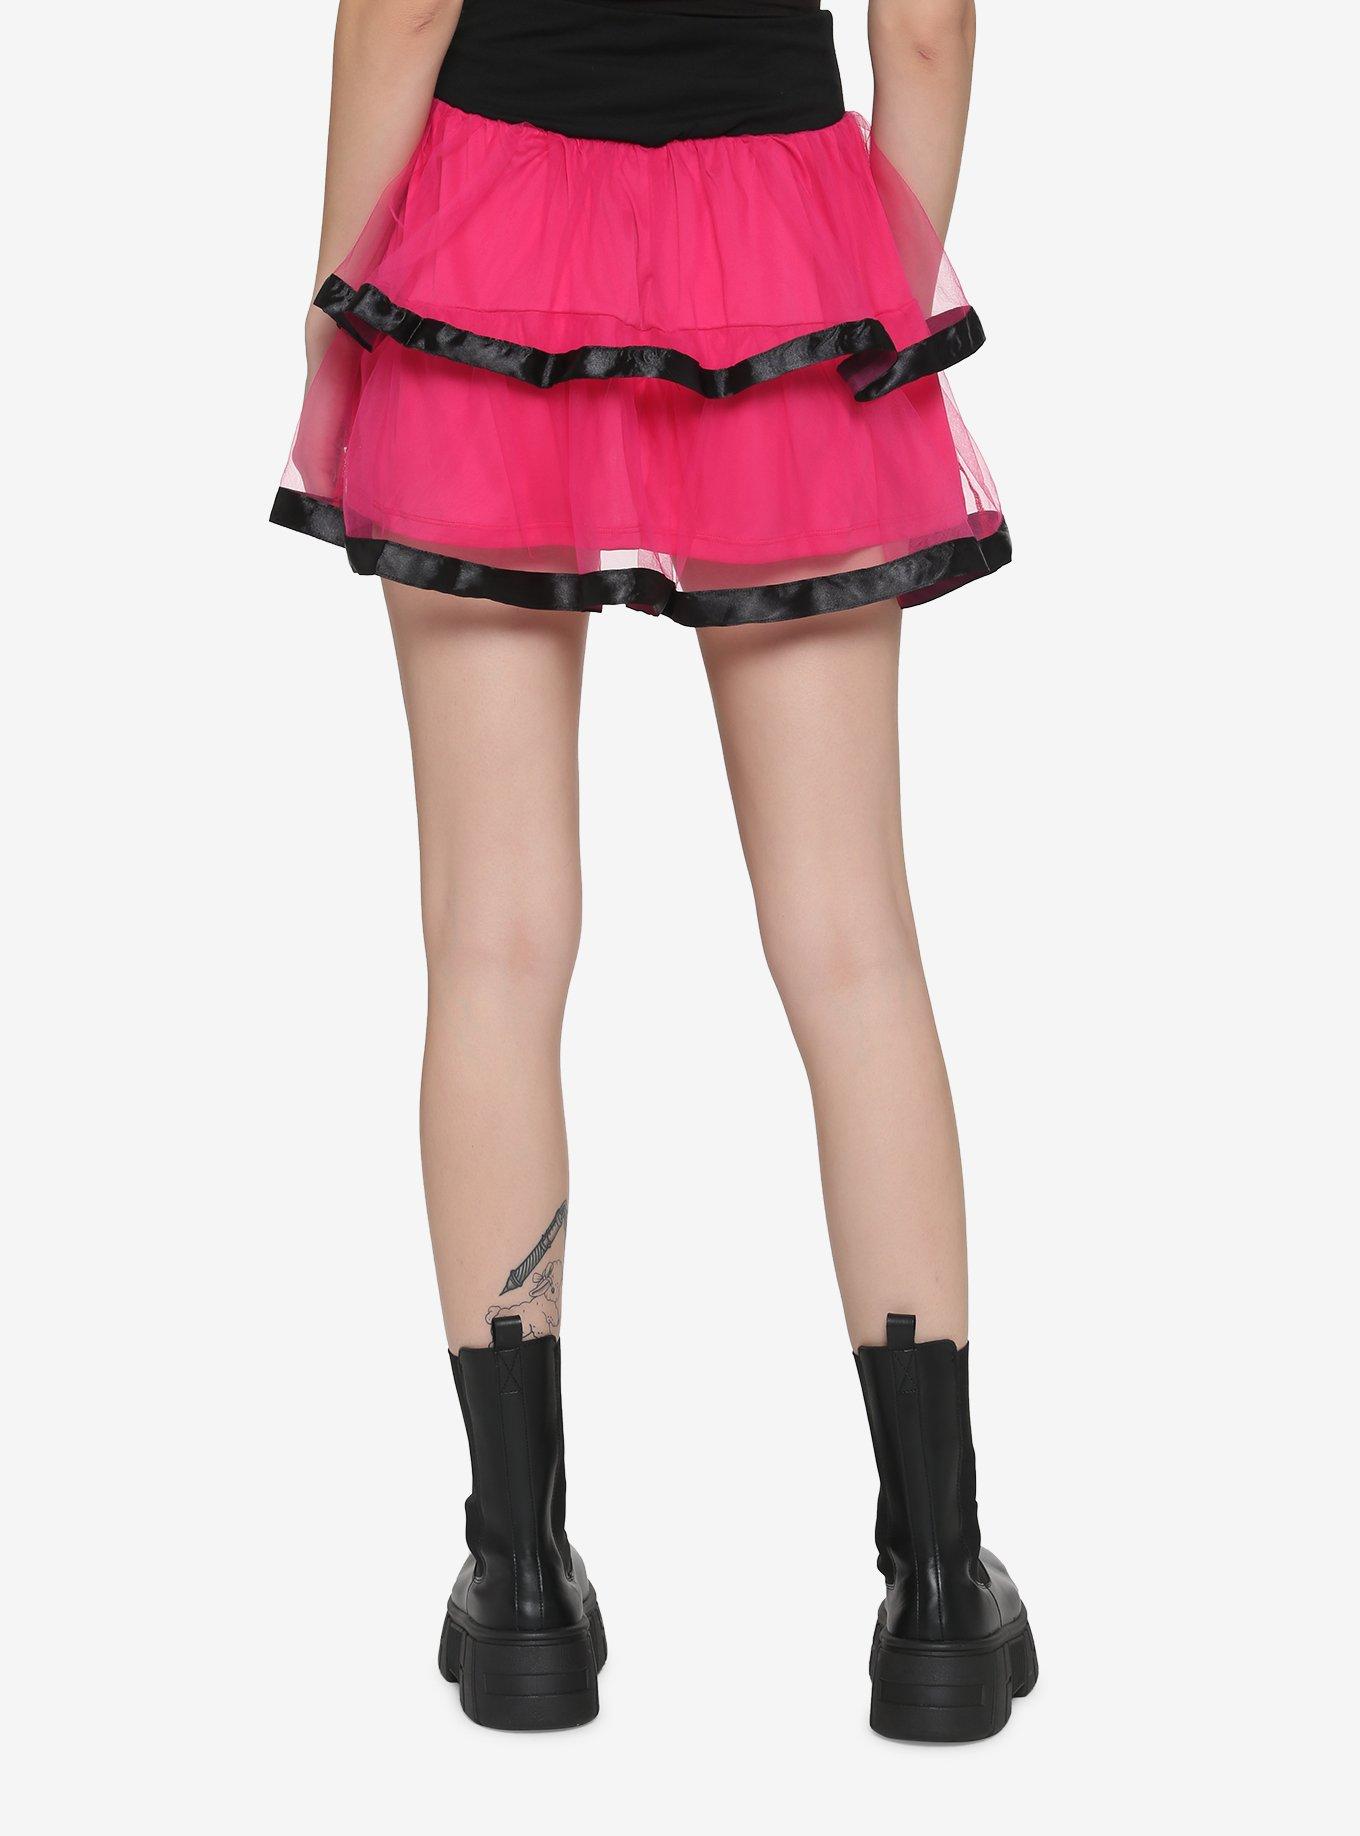 Hot Pink & Black Tutu Skirt, PINK, alternate